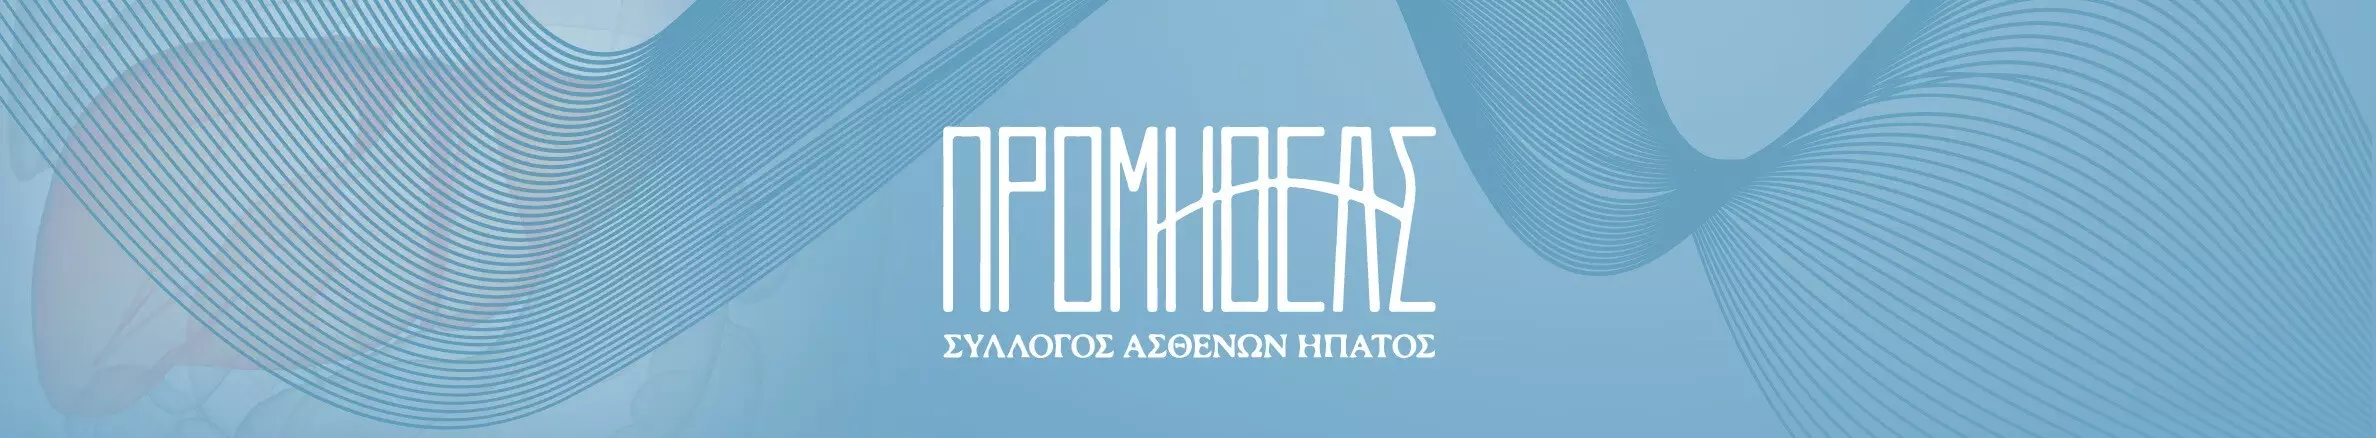 banner Σύλλογος Ασθενών Ήπατος Ελλάδος «Προμηθέας»